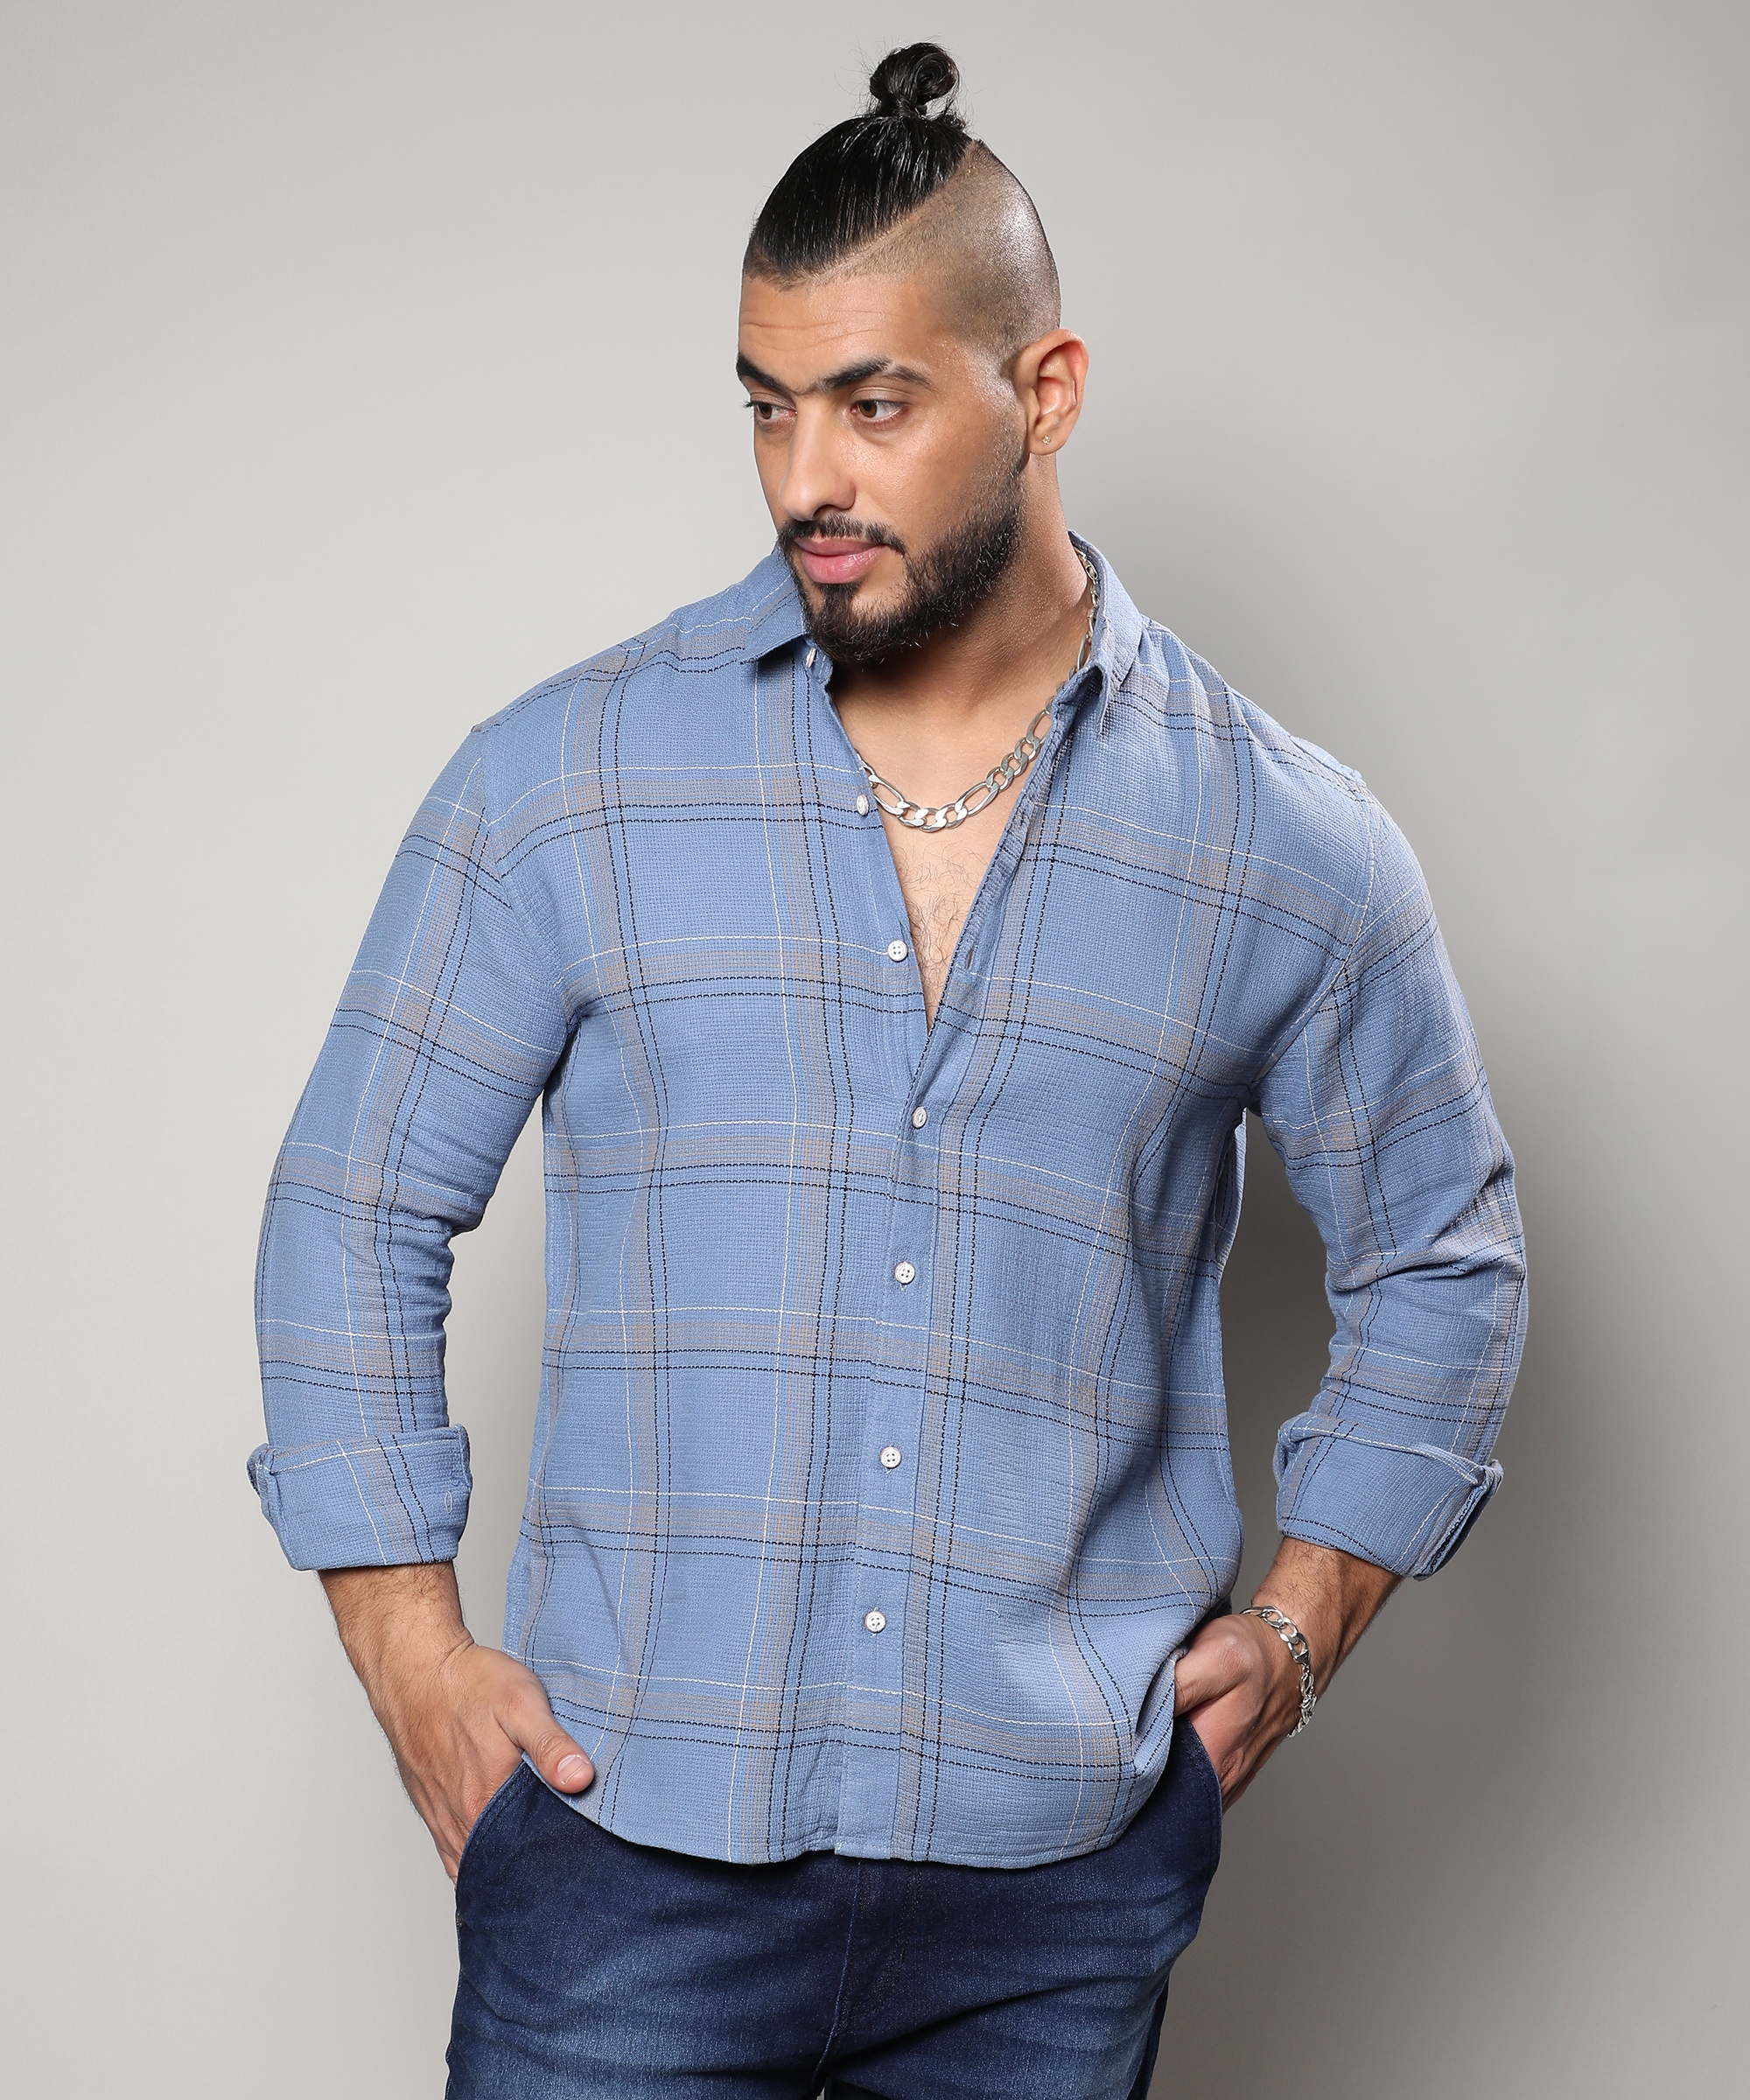 Instafab Plus | Men's Icy Blue Tartan Plaid Shirt